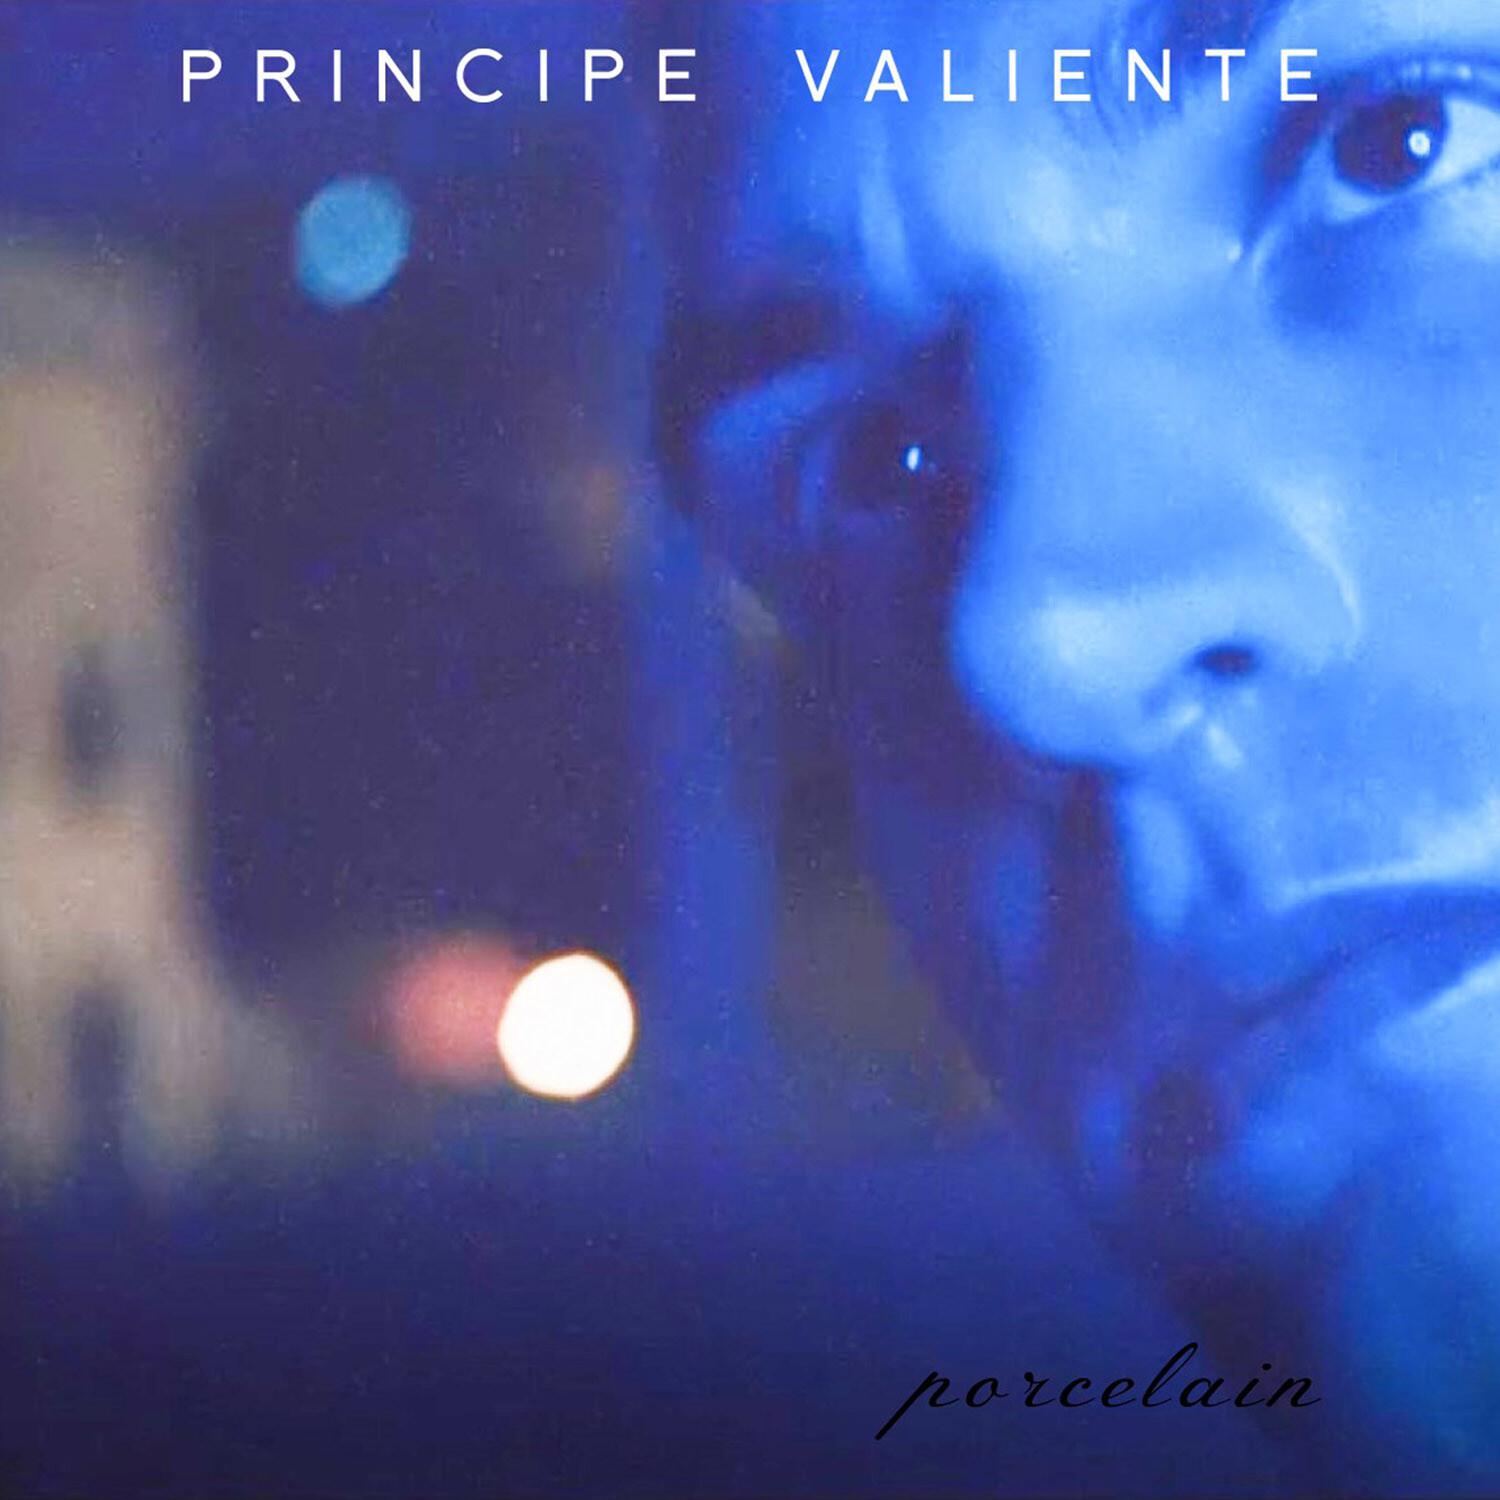 Porcelain歌词 歌手Principe Valiente-专辑Porcelain-单曲《Porcelain》LRC歌词下载